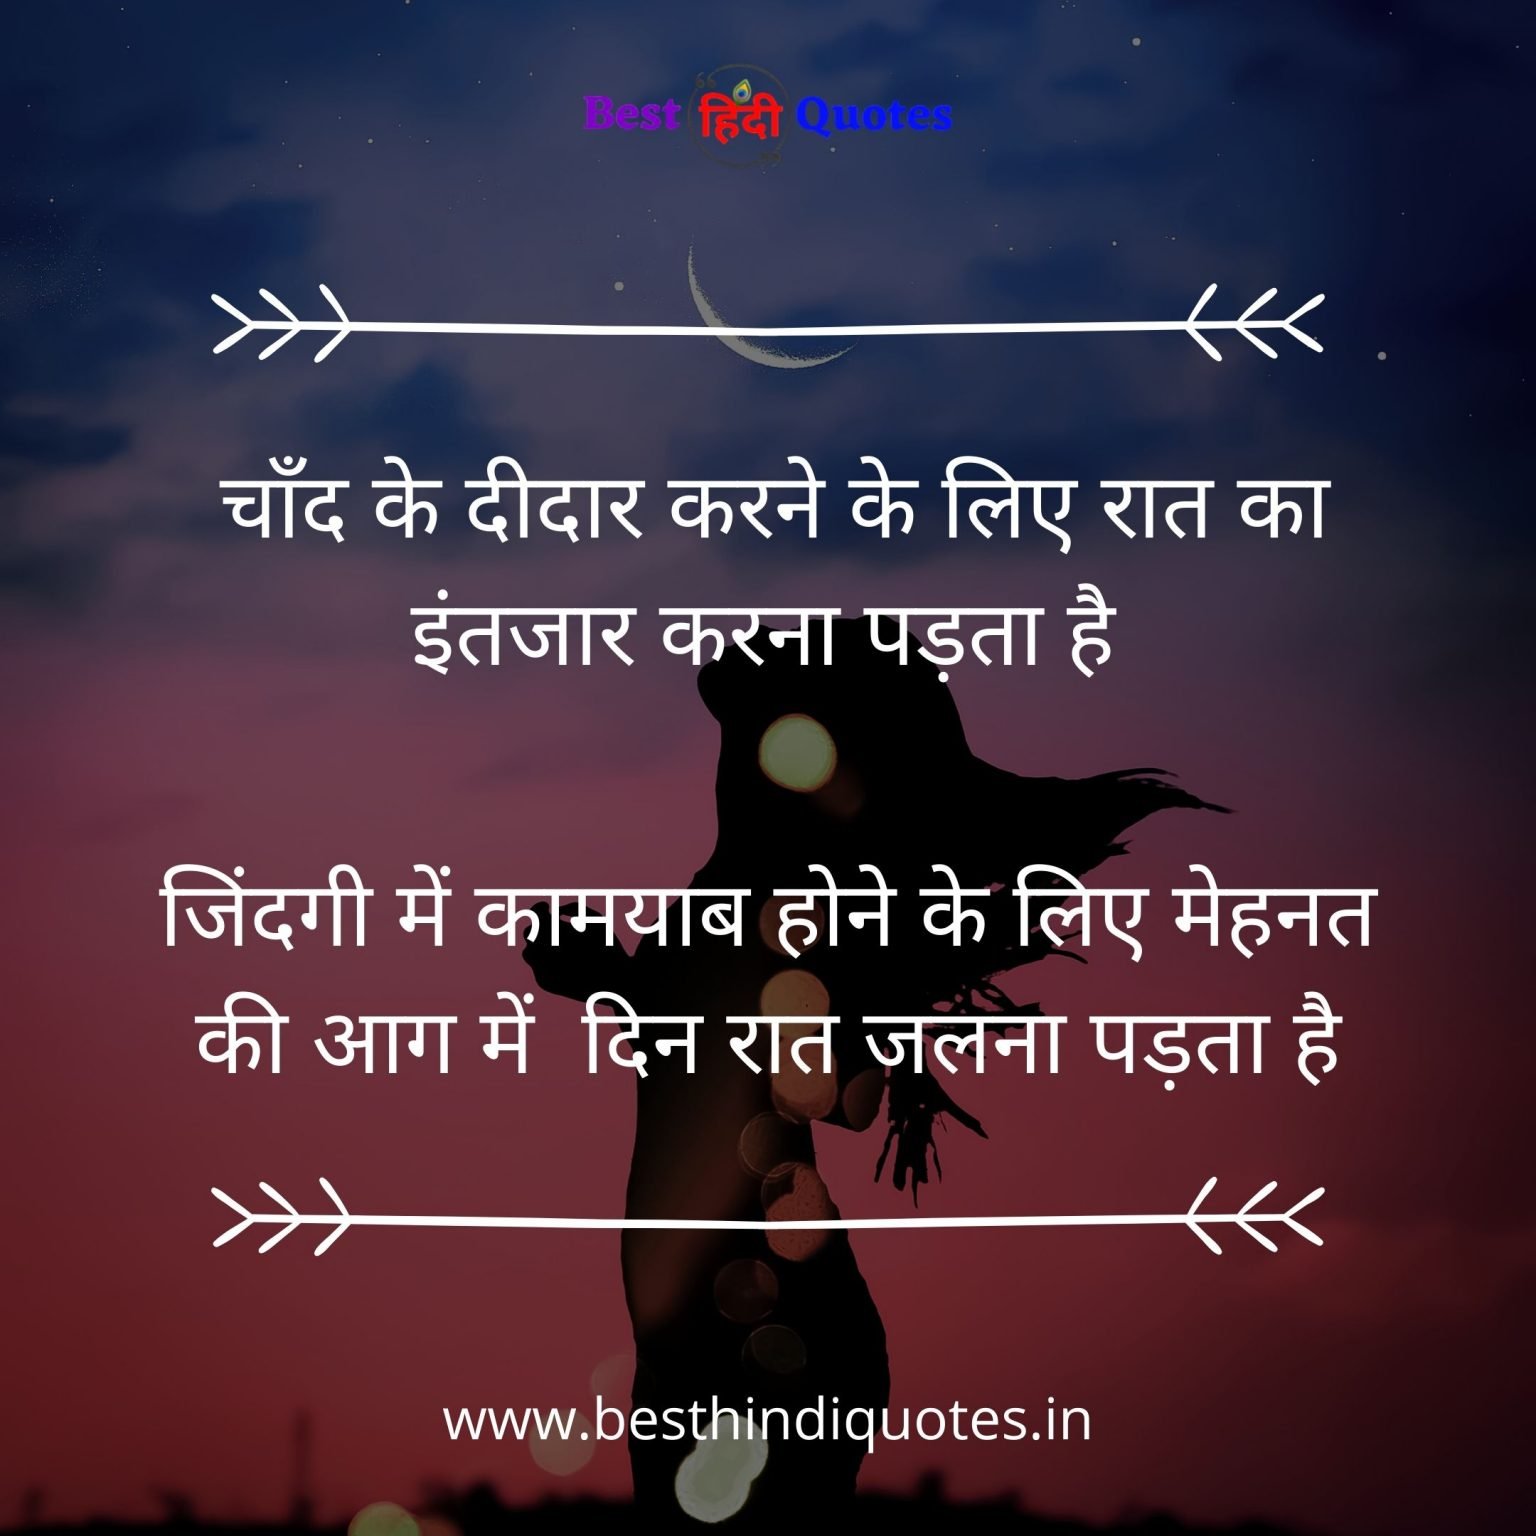 Motivational Quotes in Hindi - मोटिवेशनल कोट्स - Best Hindi Quotes